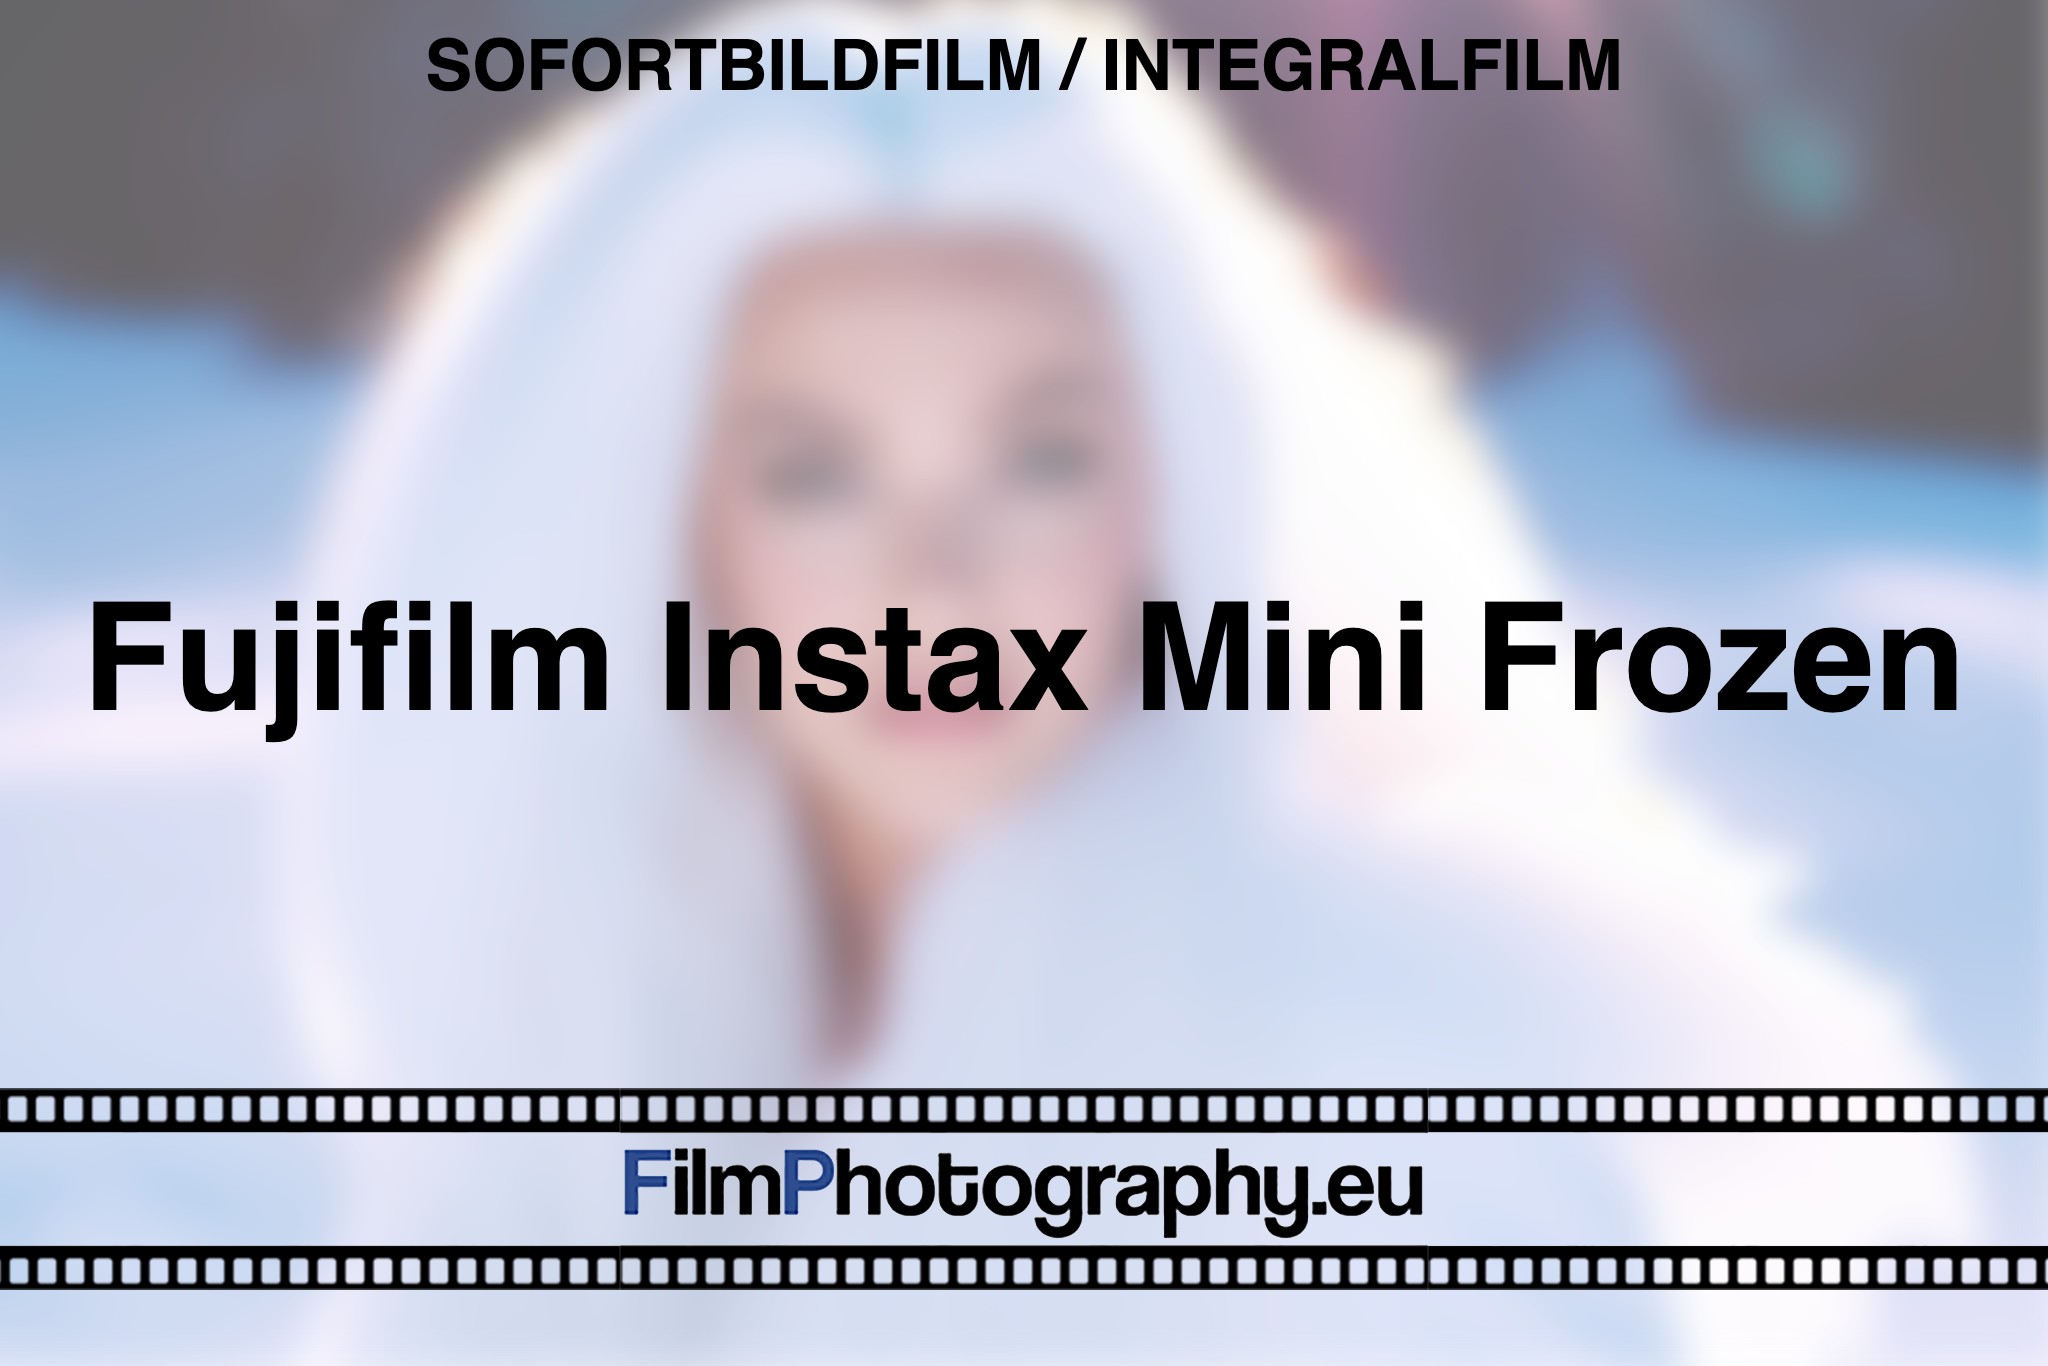 fujifilm-instax-mini-frozen-sofortbildfilm-integralfilm-fp-bnv